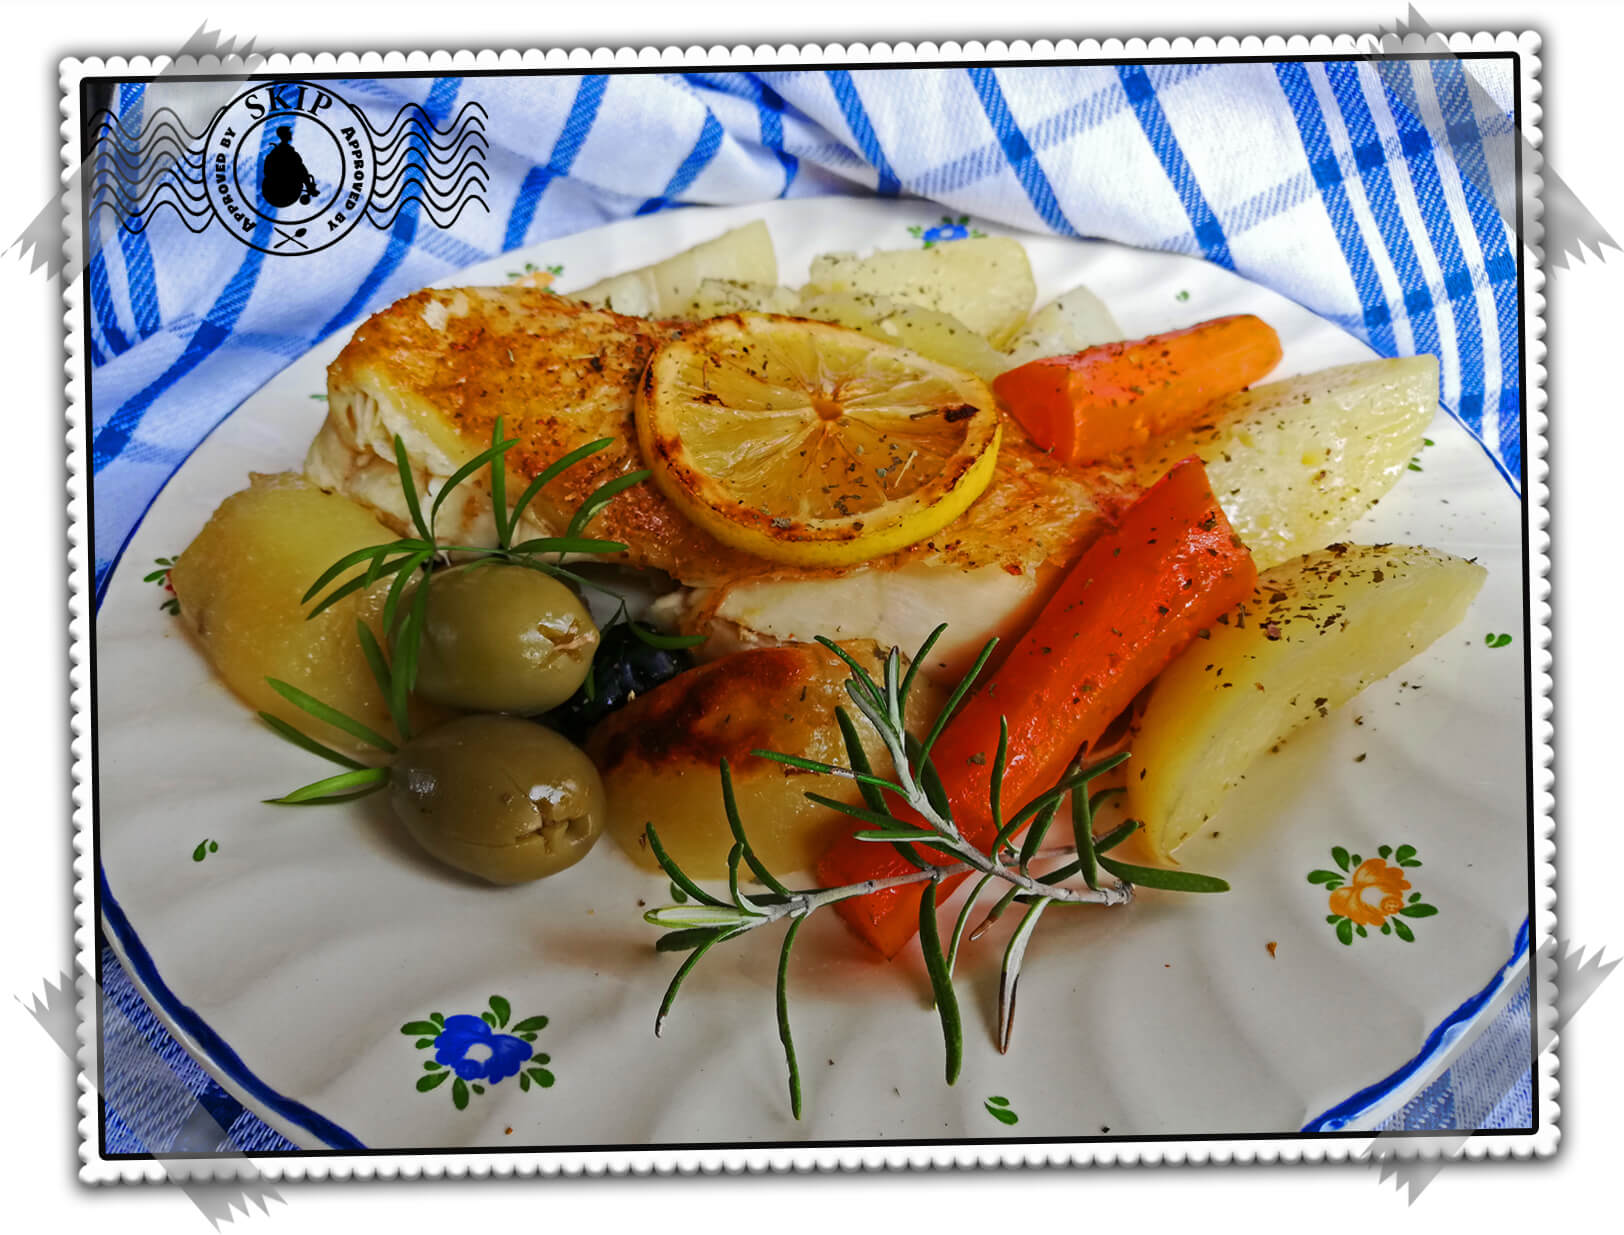 Greek cuisine